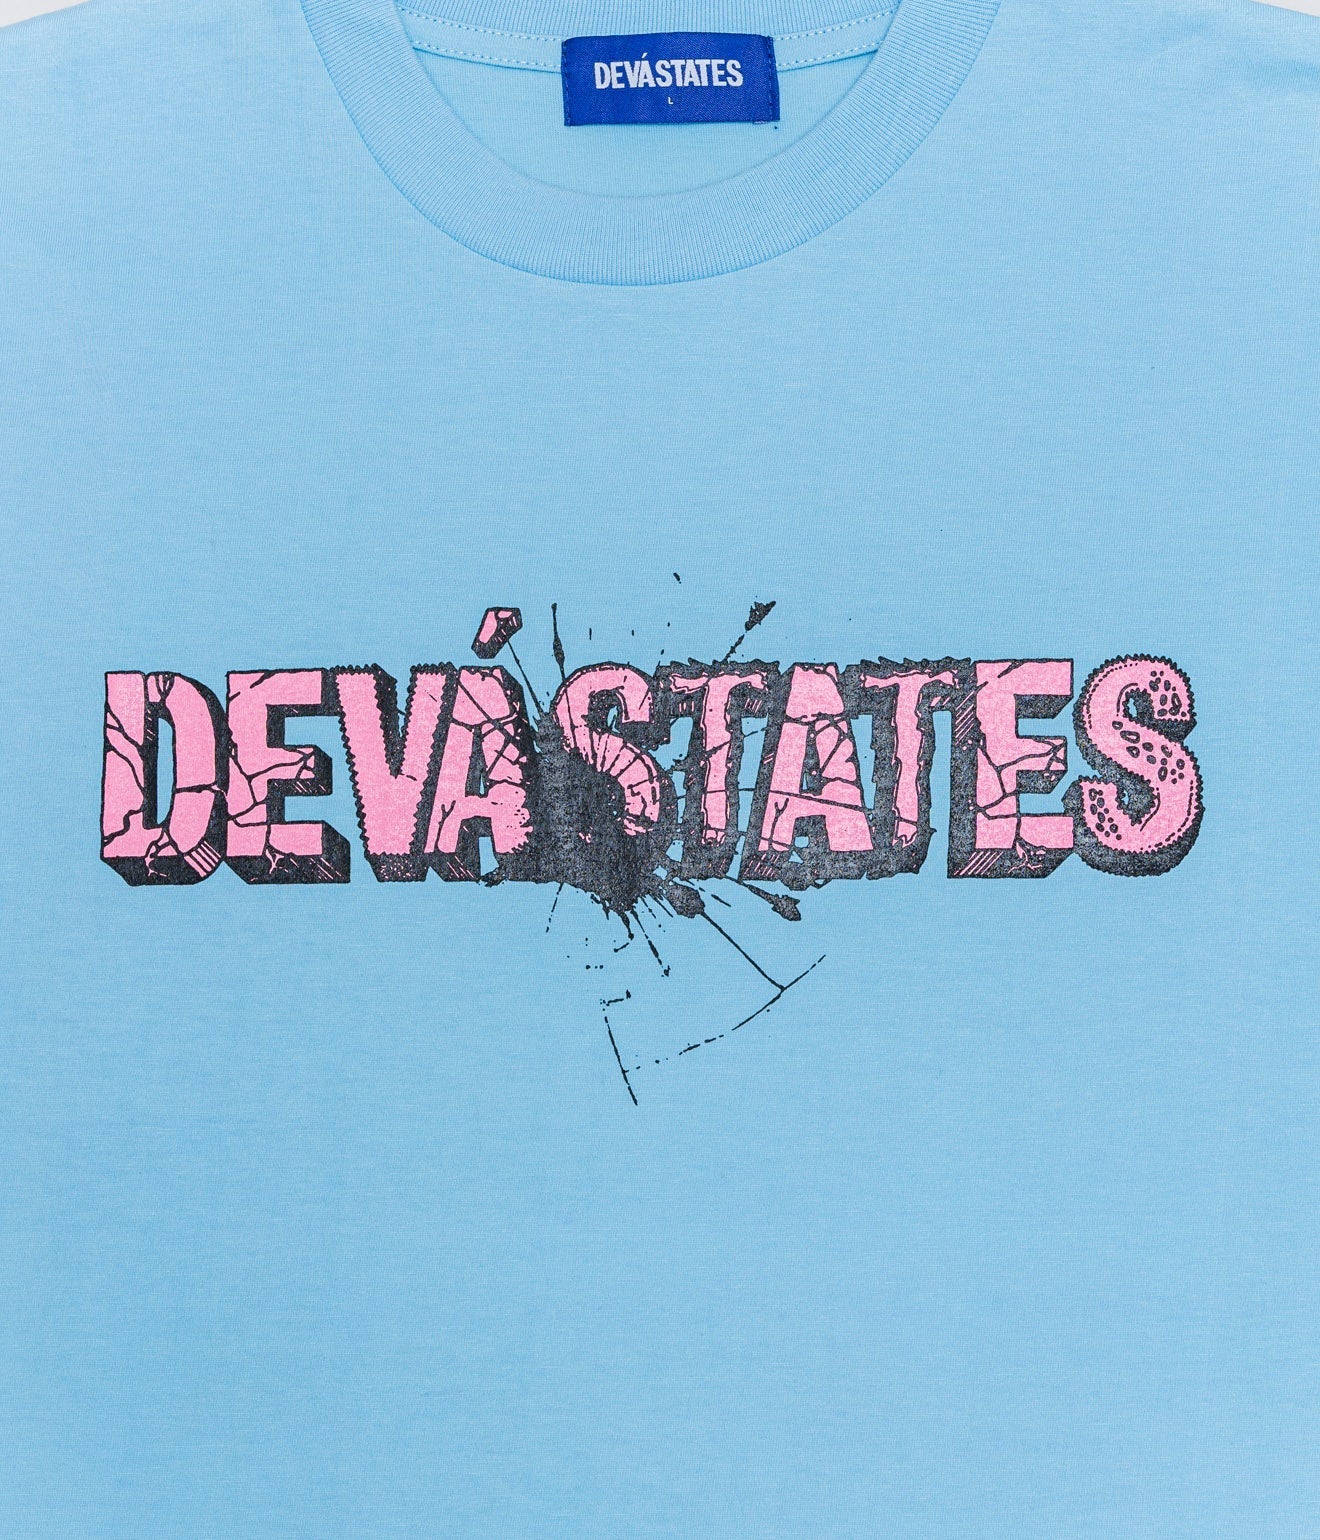 DEVÁ STATES "CRACKED LOGO T-Shirt" Washed Blue - WEAREALLANIMALS